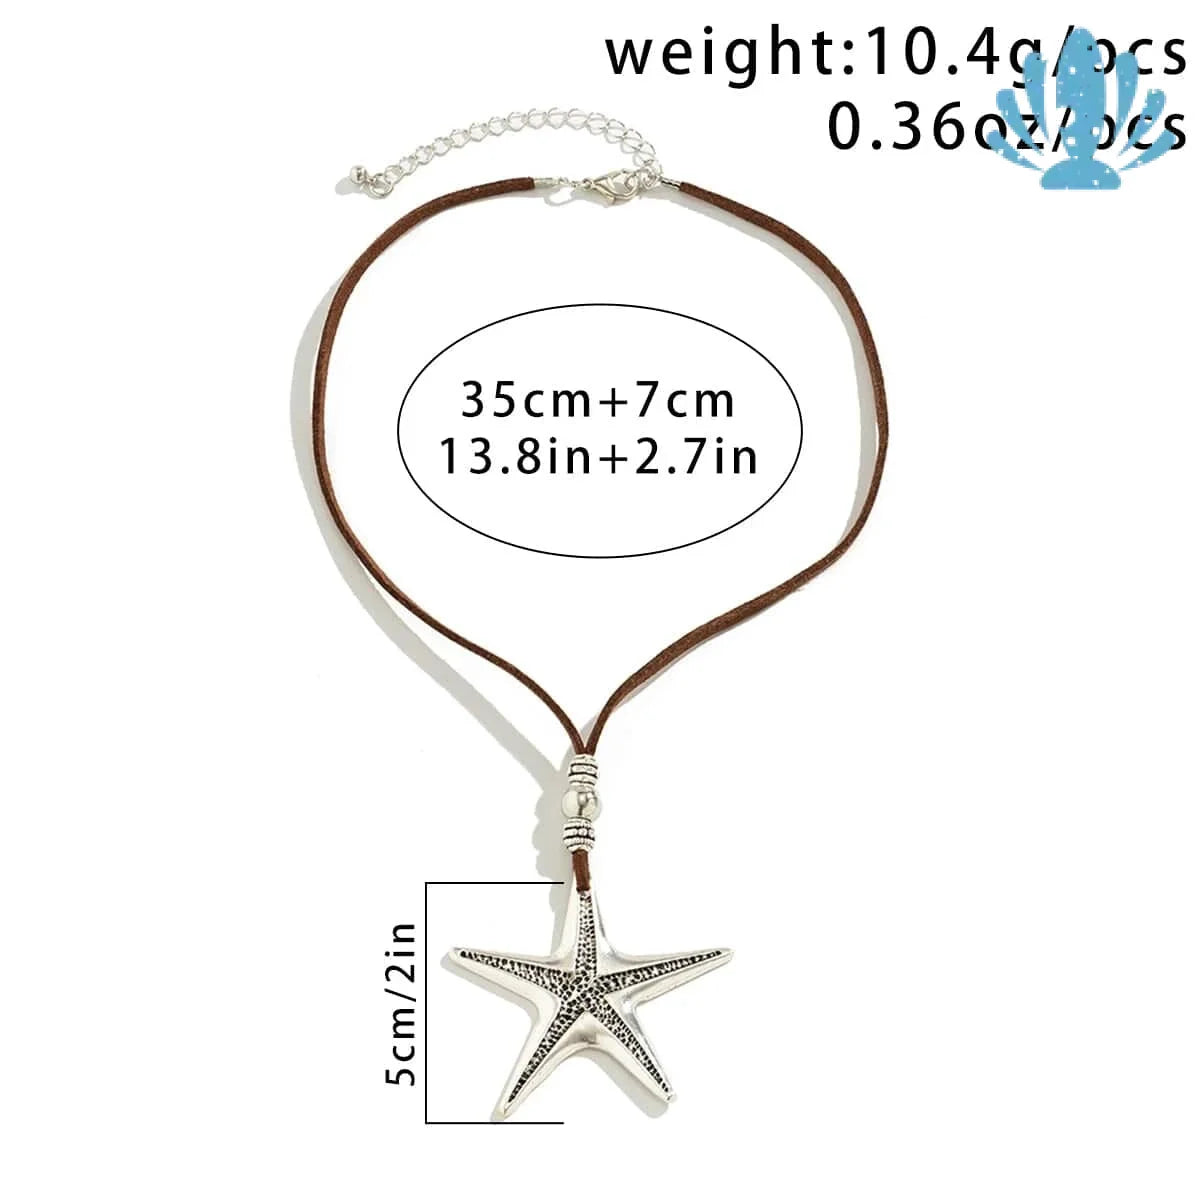 Starfish pendant necklace